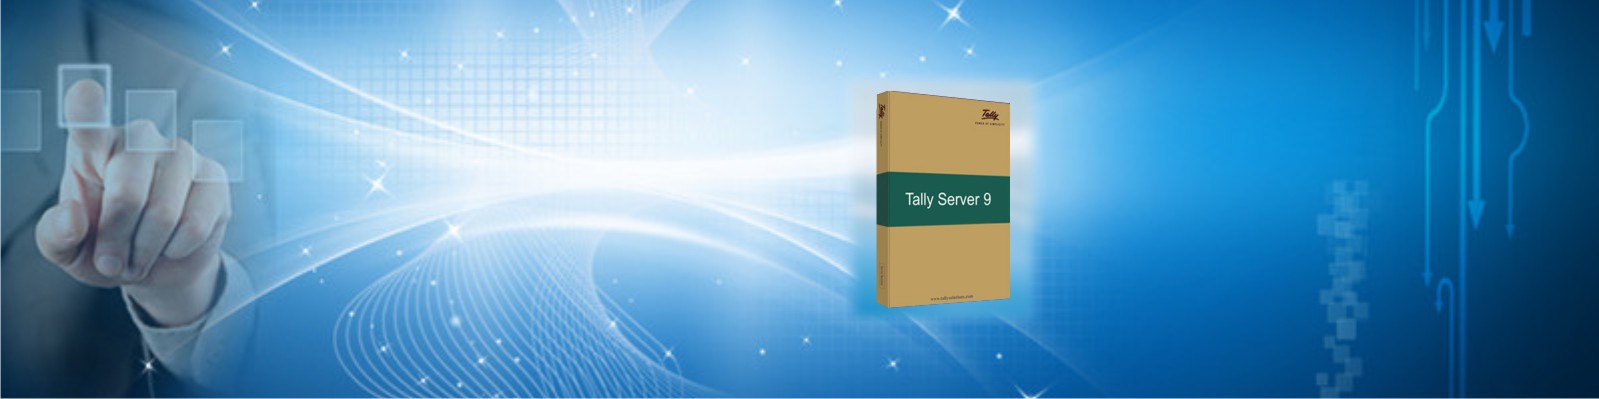 tally-server-9-4-4-18